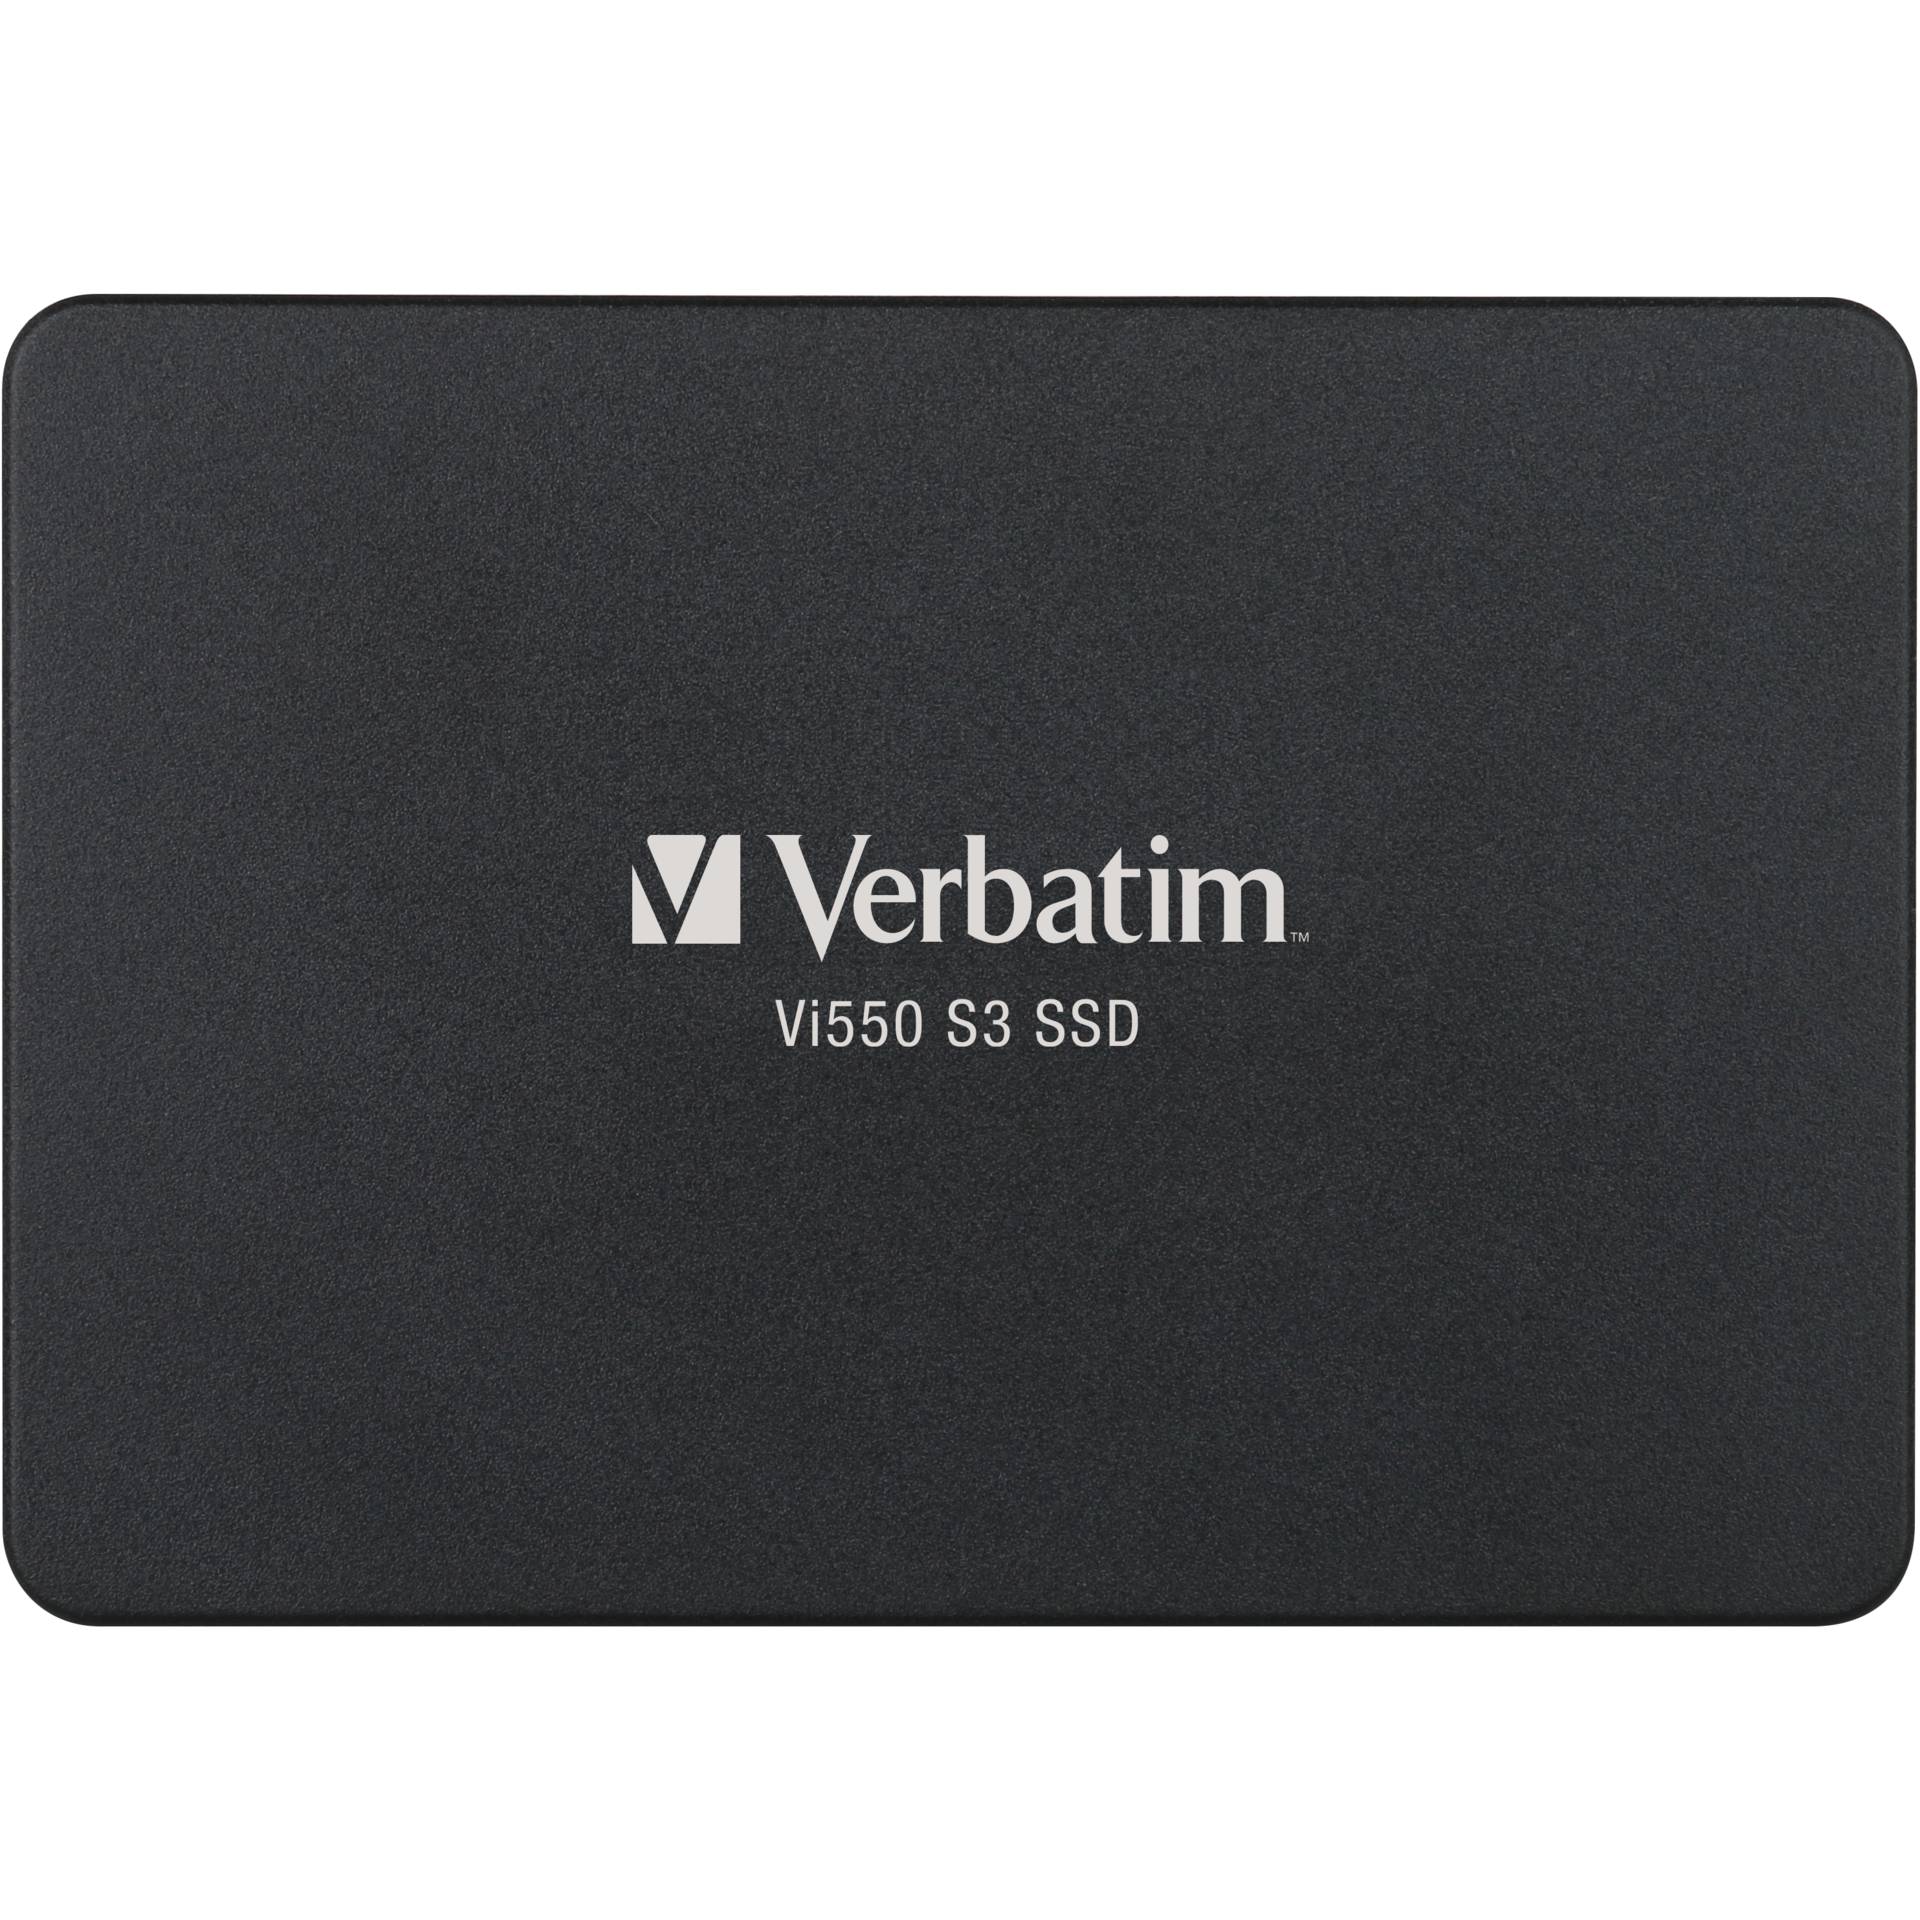 128 GB SSD Verbatim Vi550 S3 SATA 6GB/s 6,4cm/ 2.5 Zoll lesen:560MB/s, schreiben: 430MB/s